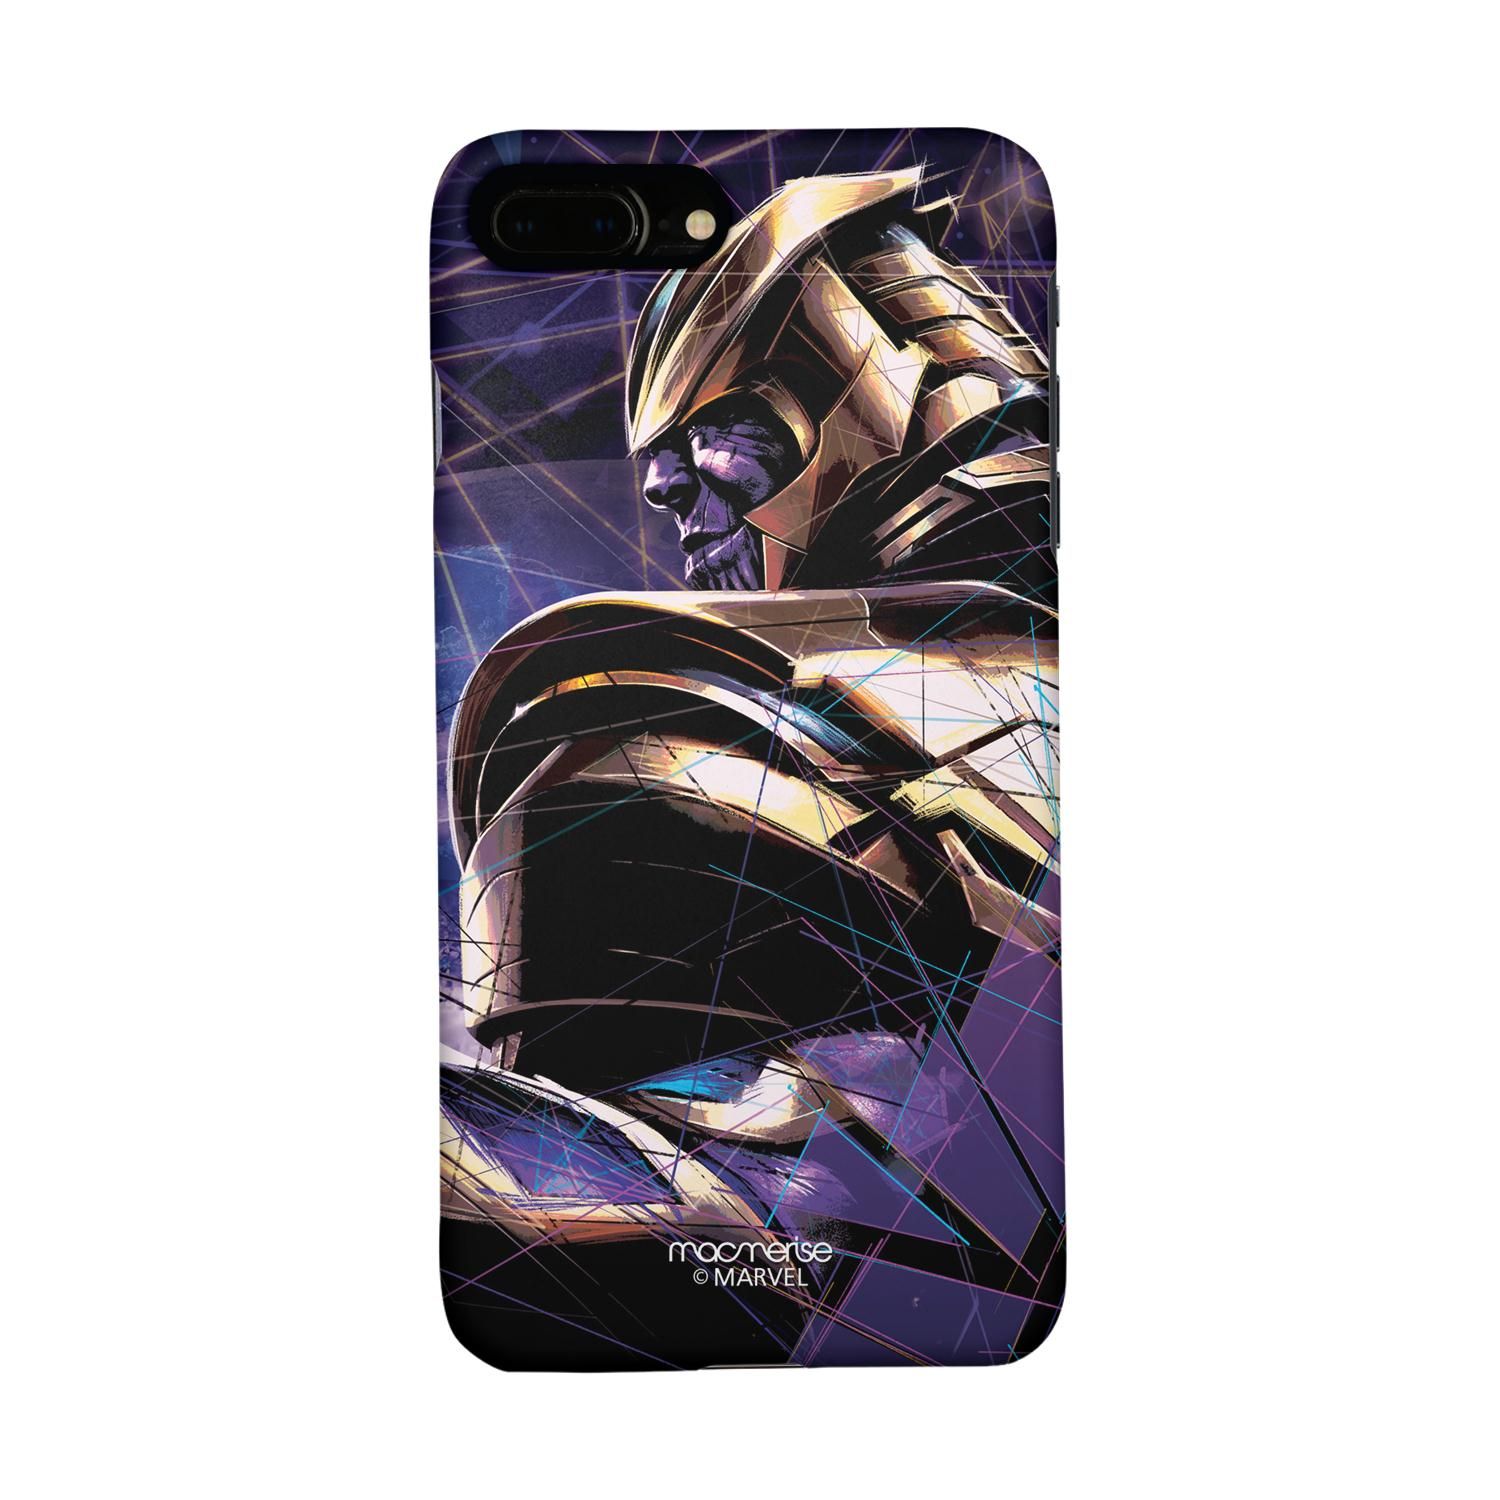 Buy Thanos on Edge - Sleek Phone Case for iPhone 7 Plus Online